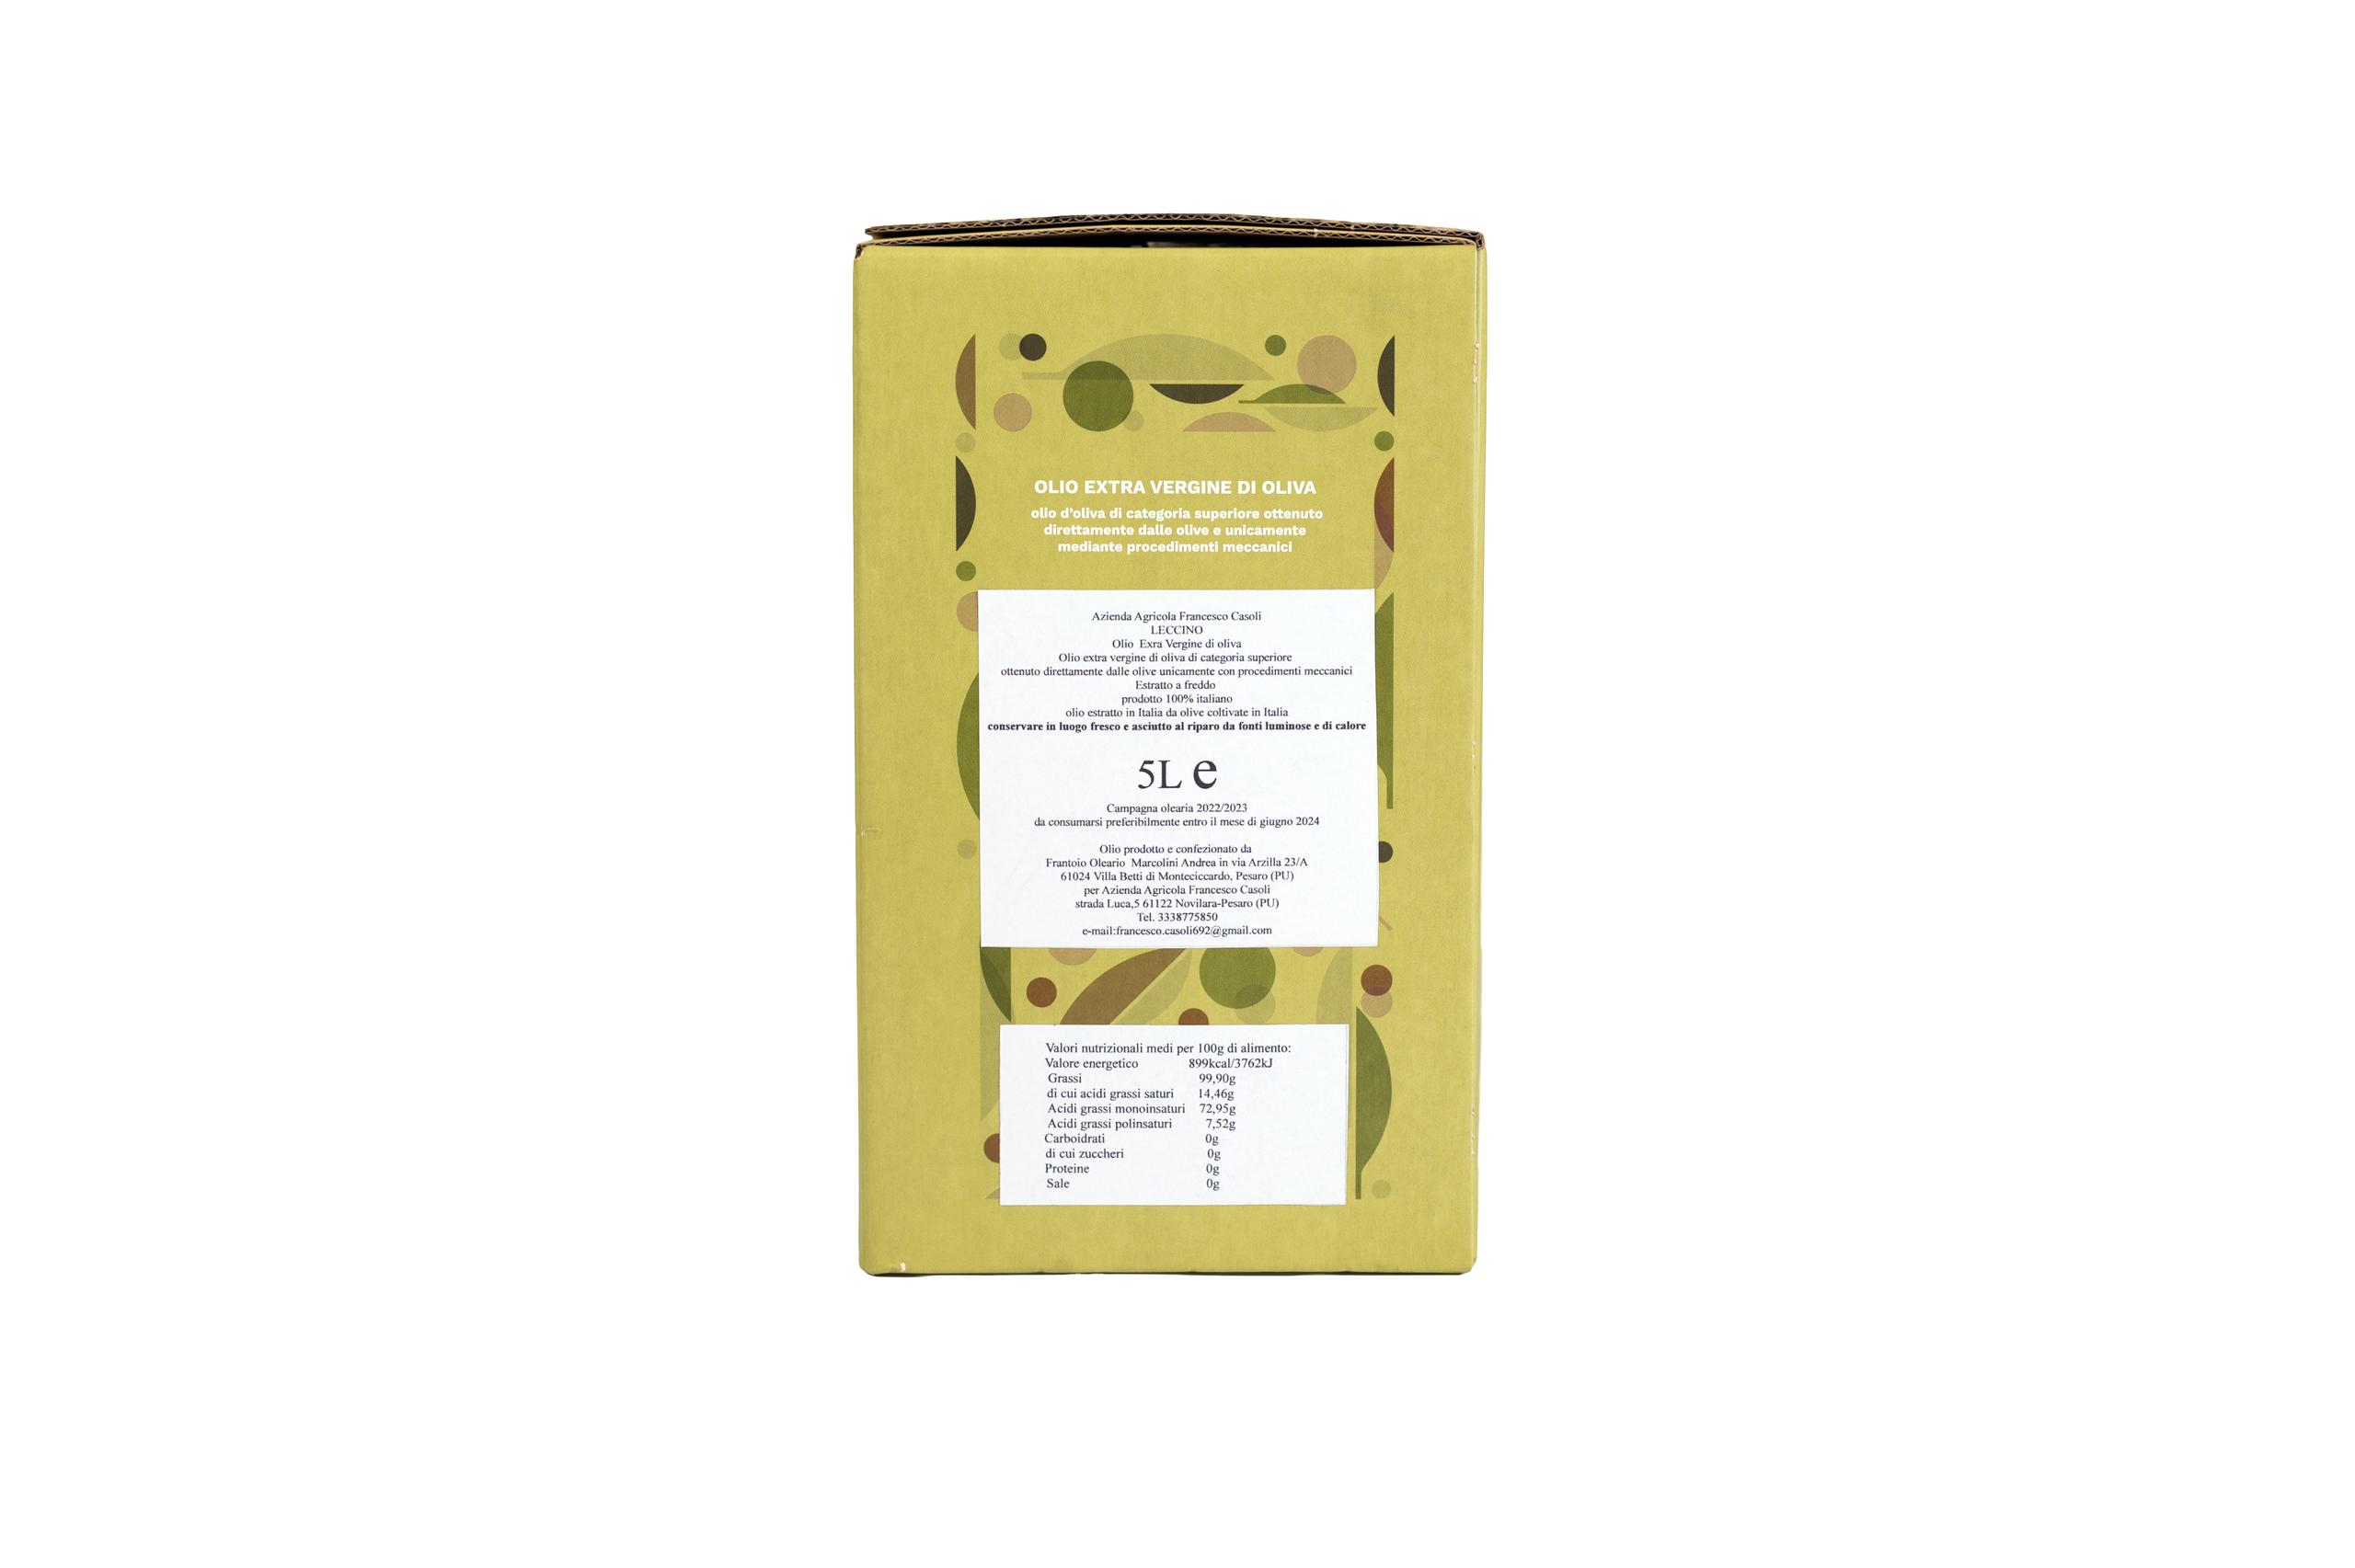 Olio Extravergine di oliva Leccino Bag in Box